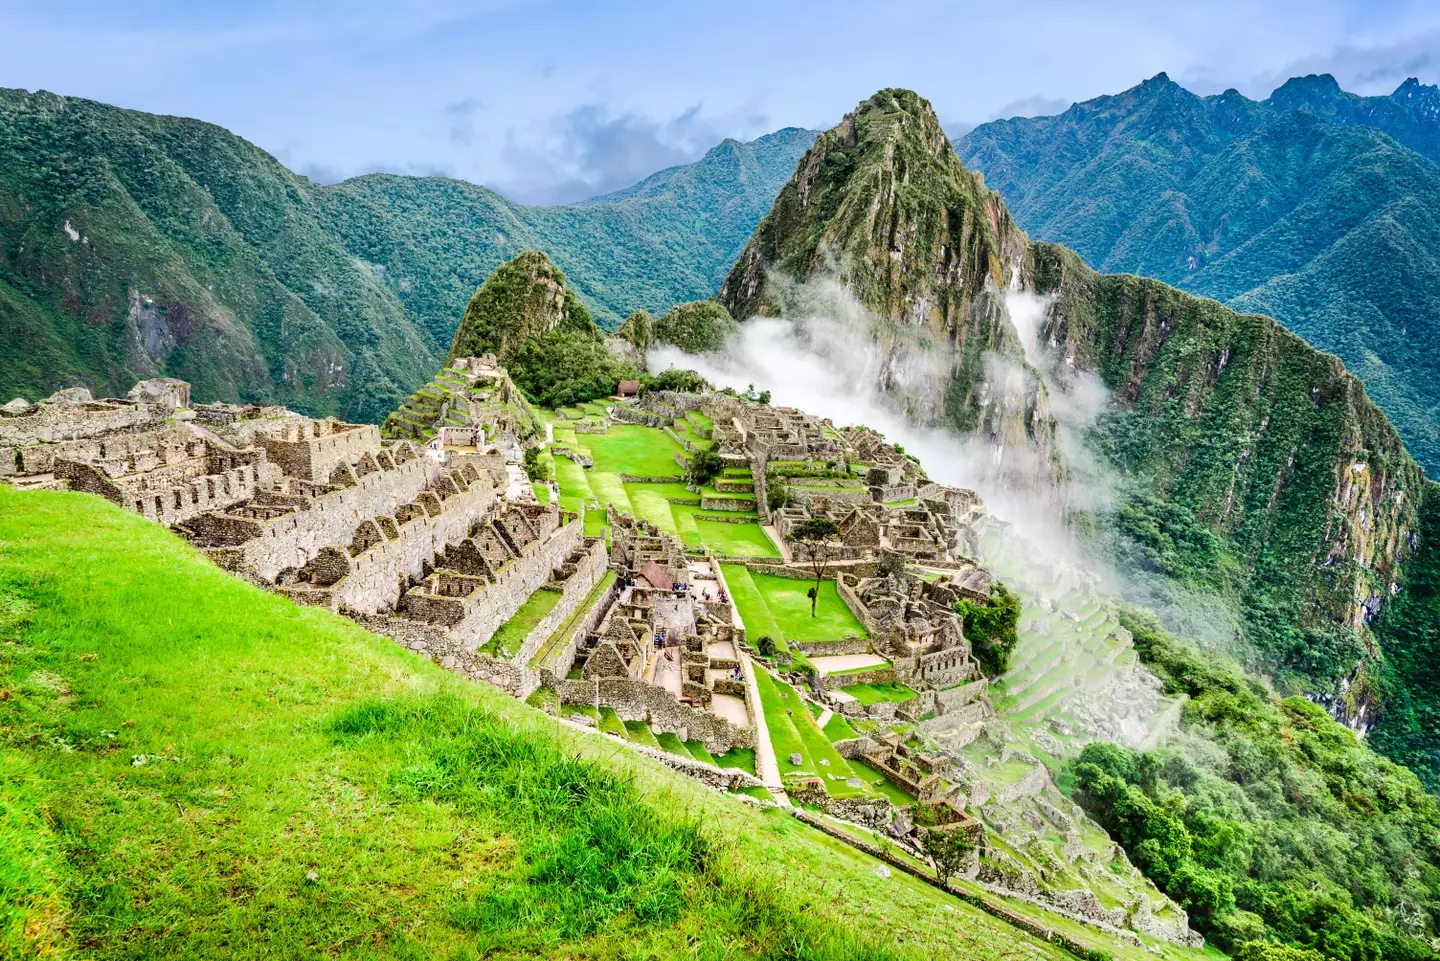 Machu Picchu was re-discovered in 1911.